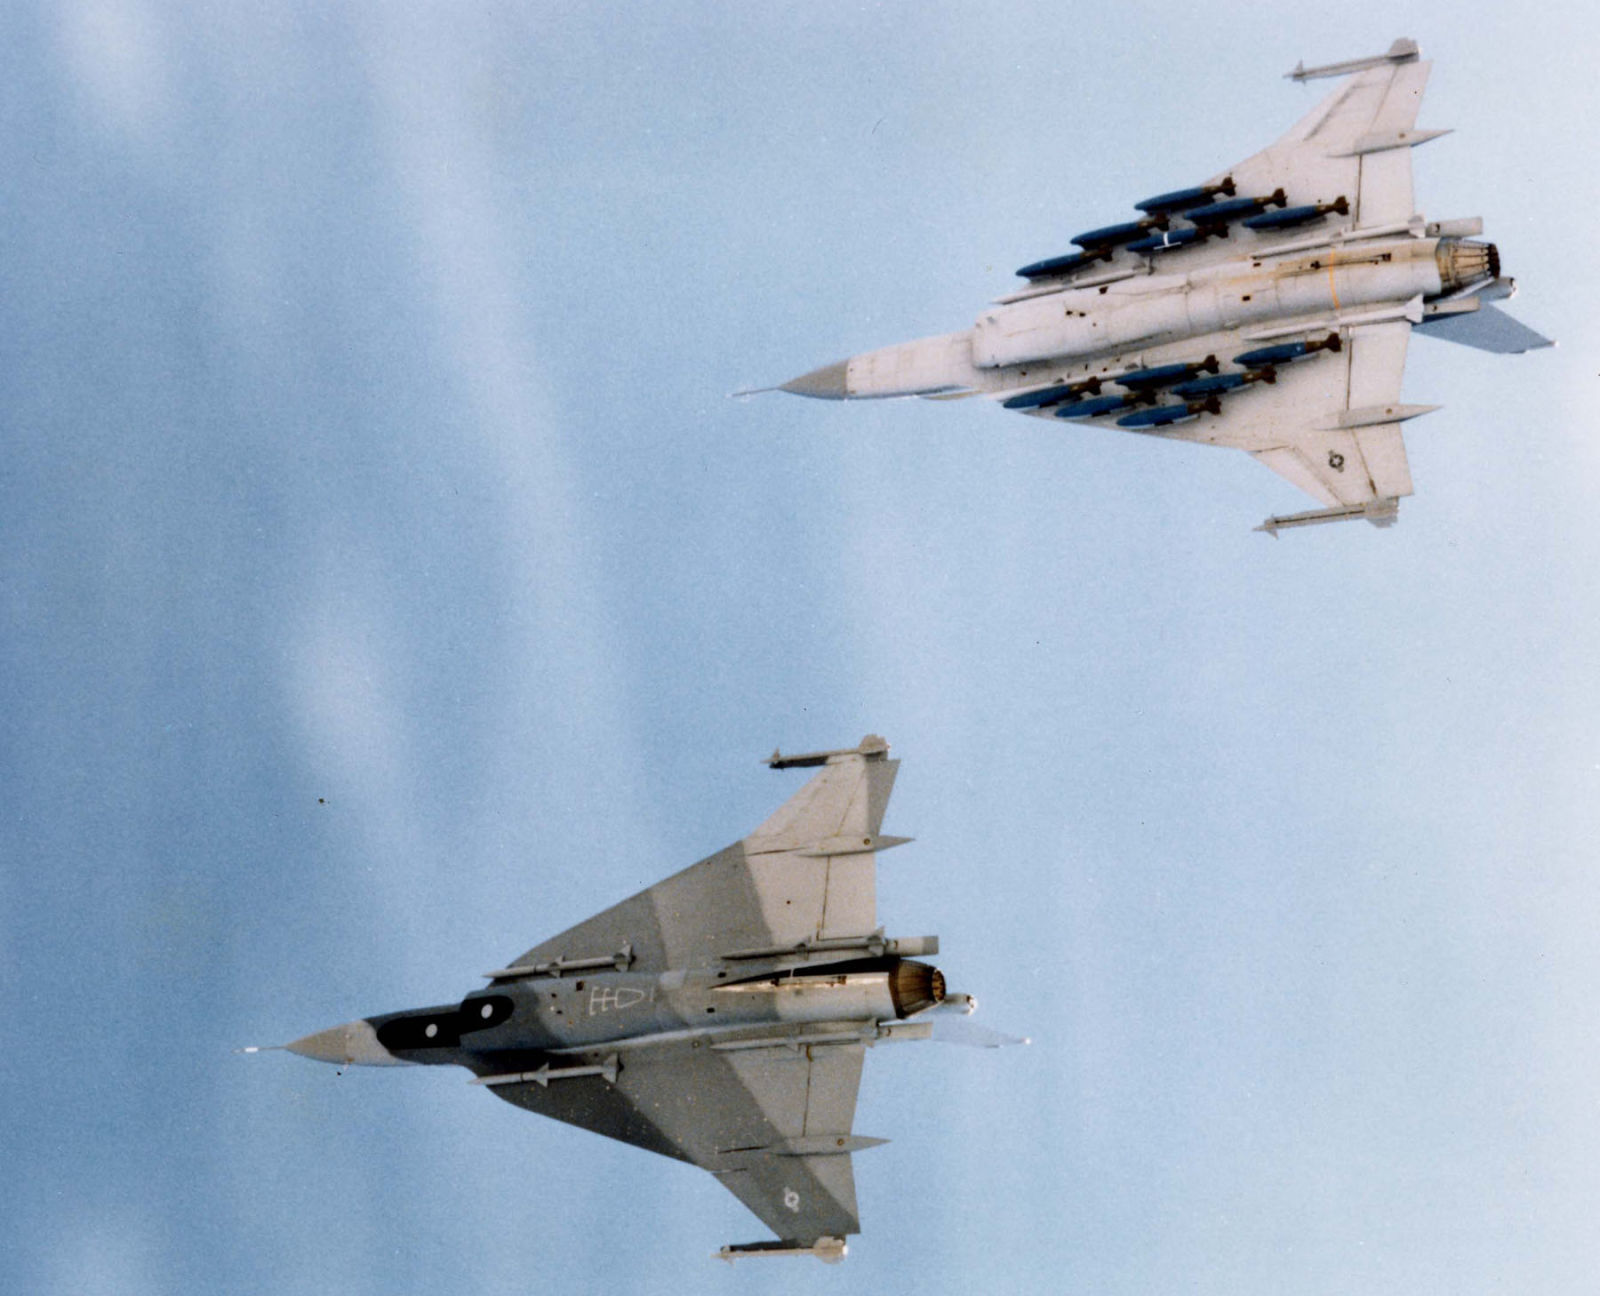 Both F-16XLs in flight